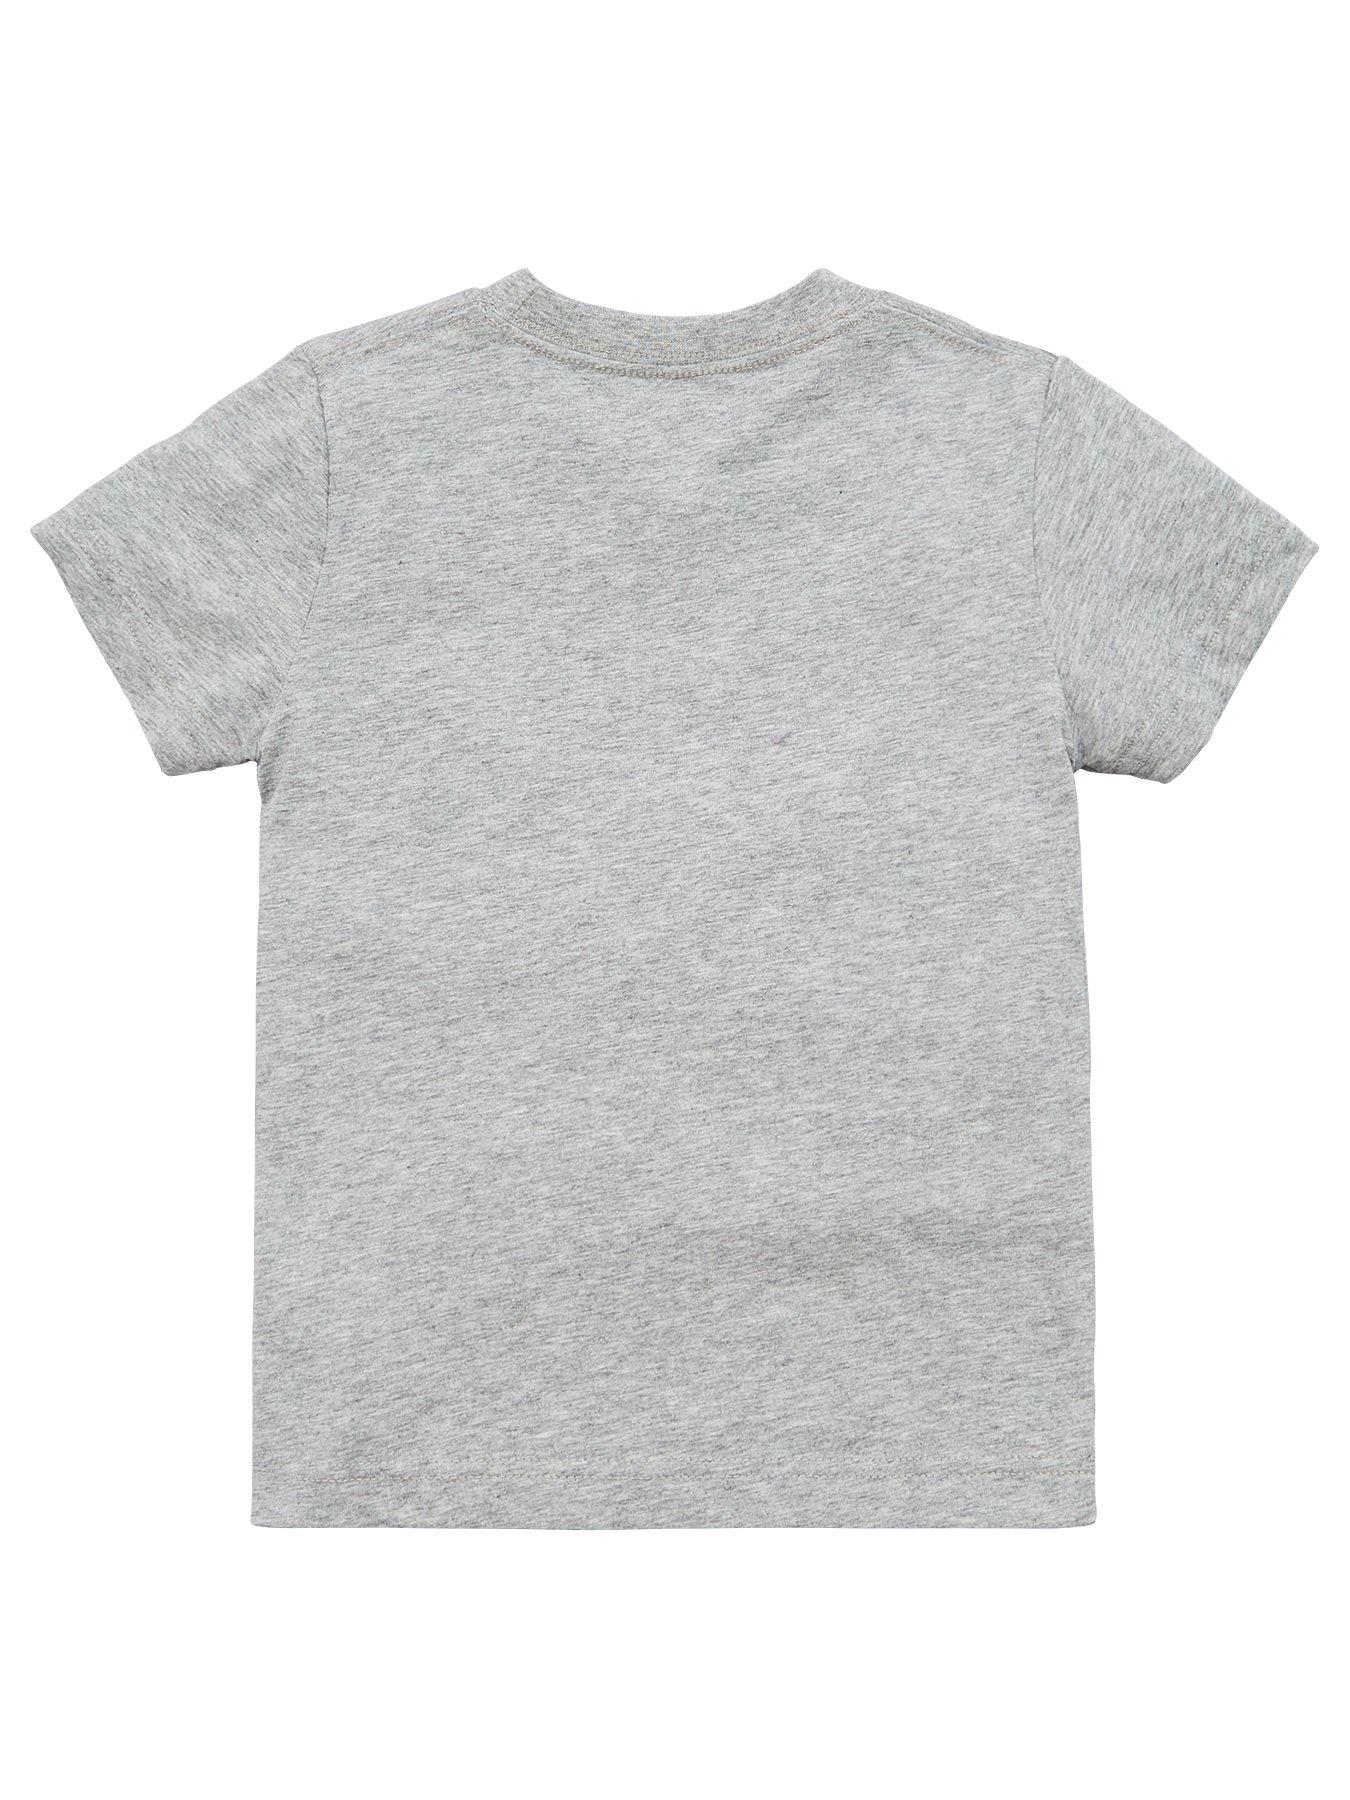 Converse Kids Boys Chuck Grey T-Shirt Dark Patch 